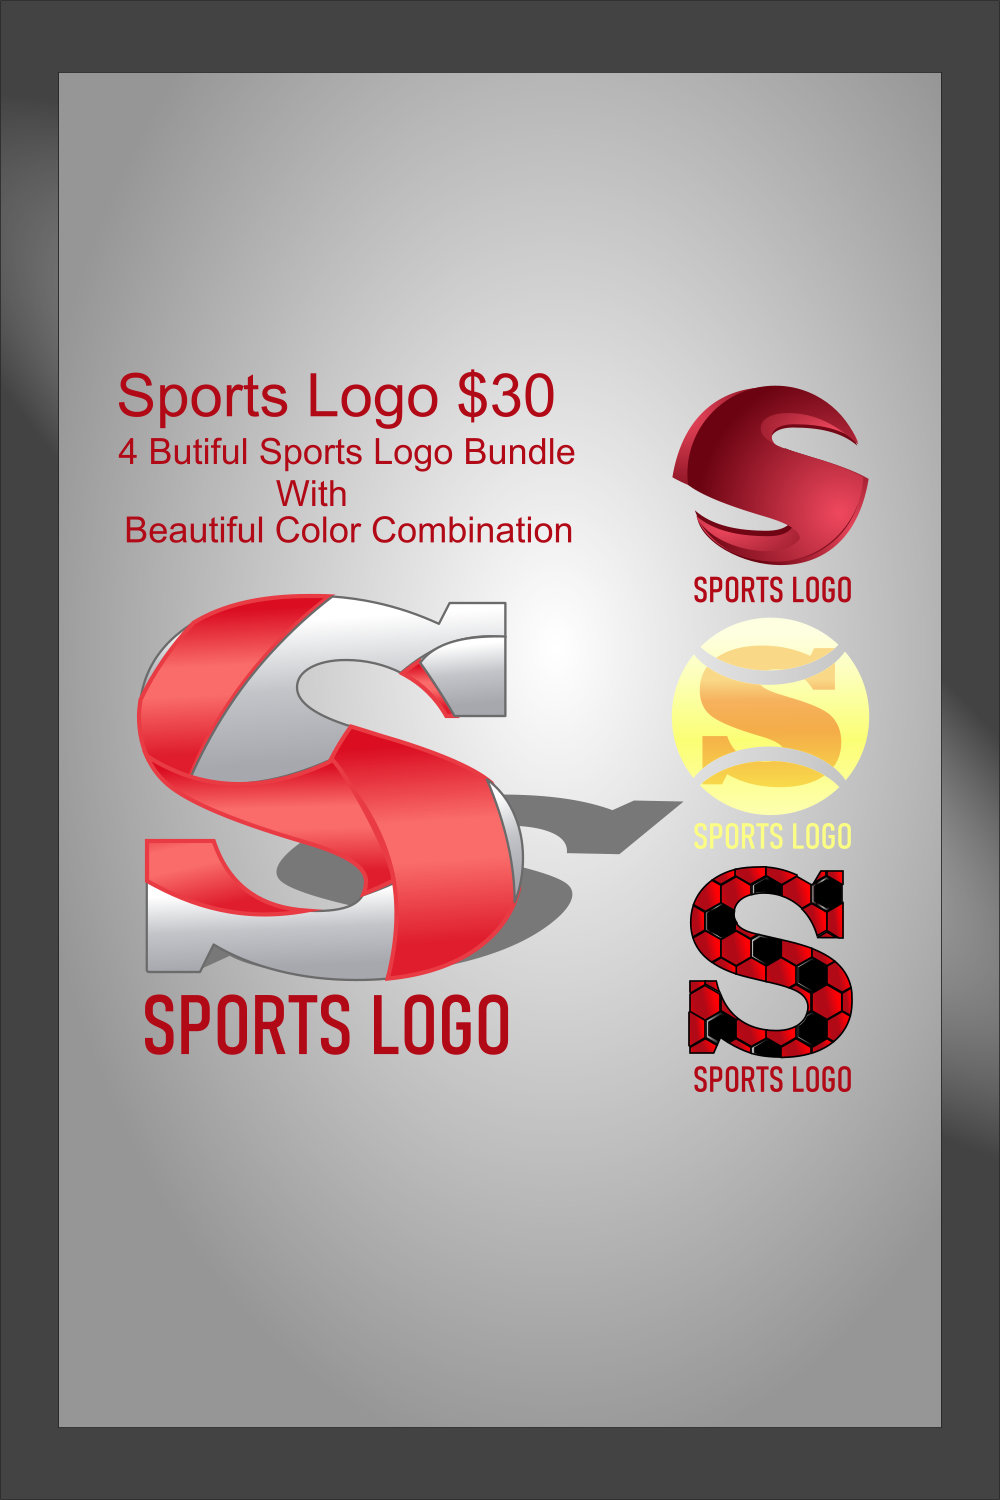 Sports Logo Design pinterest image.